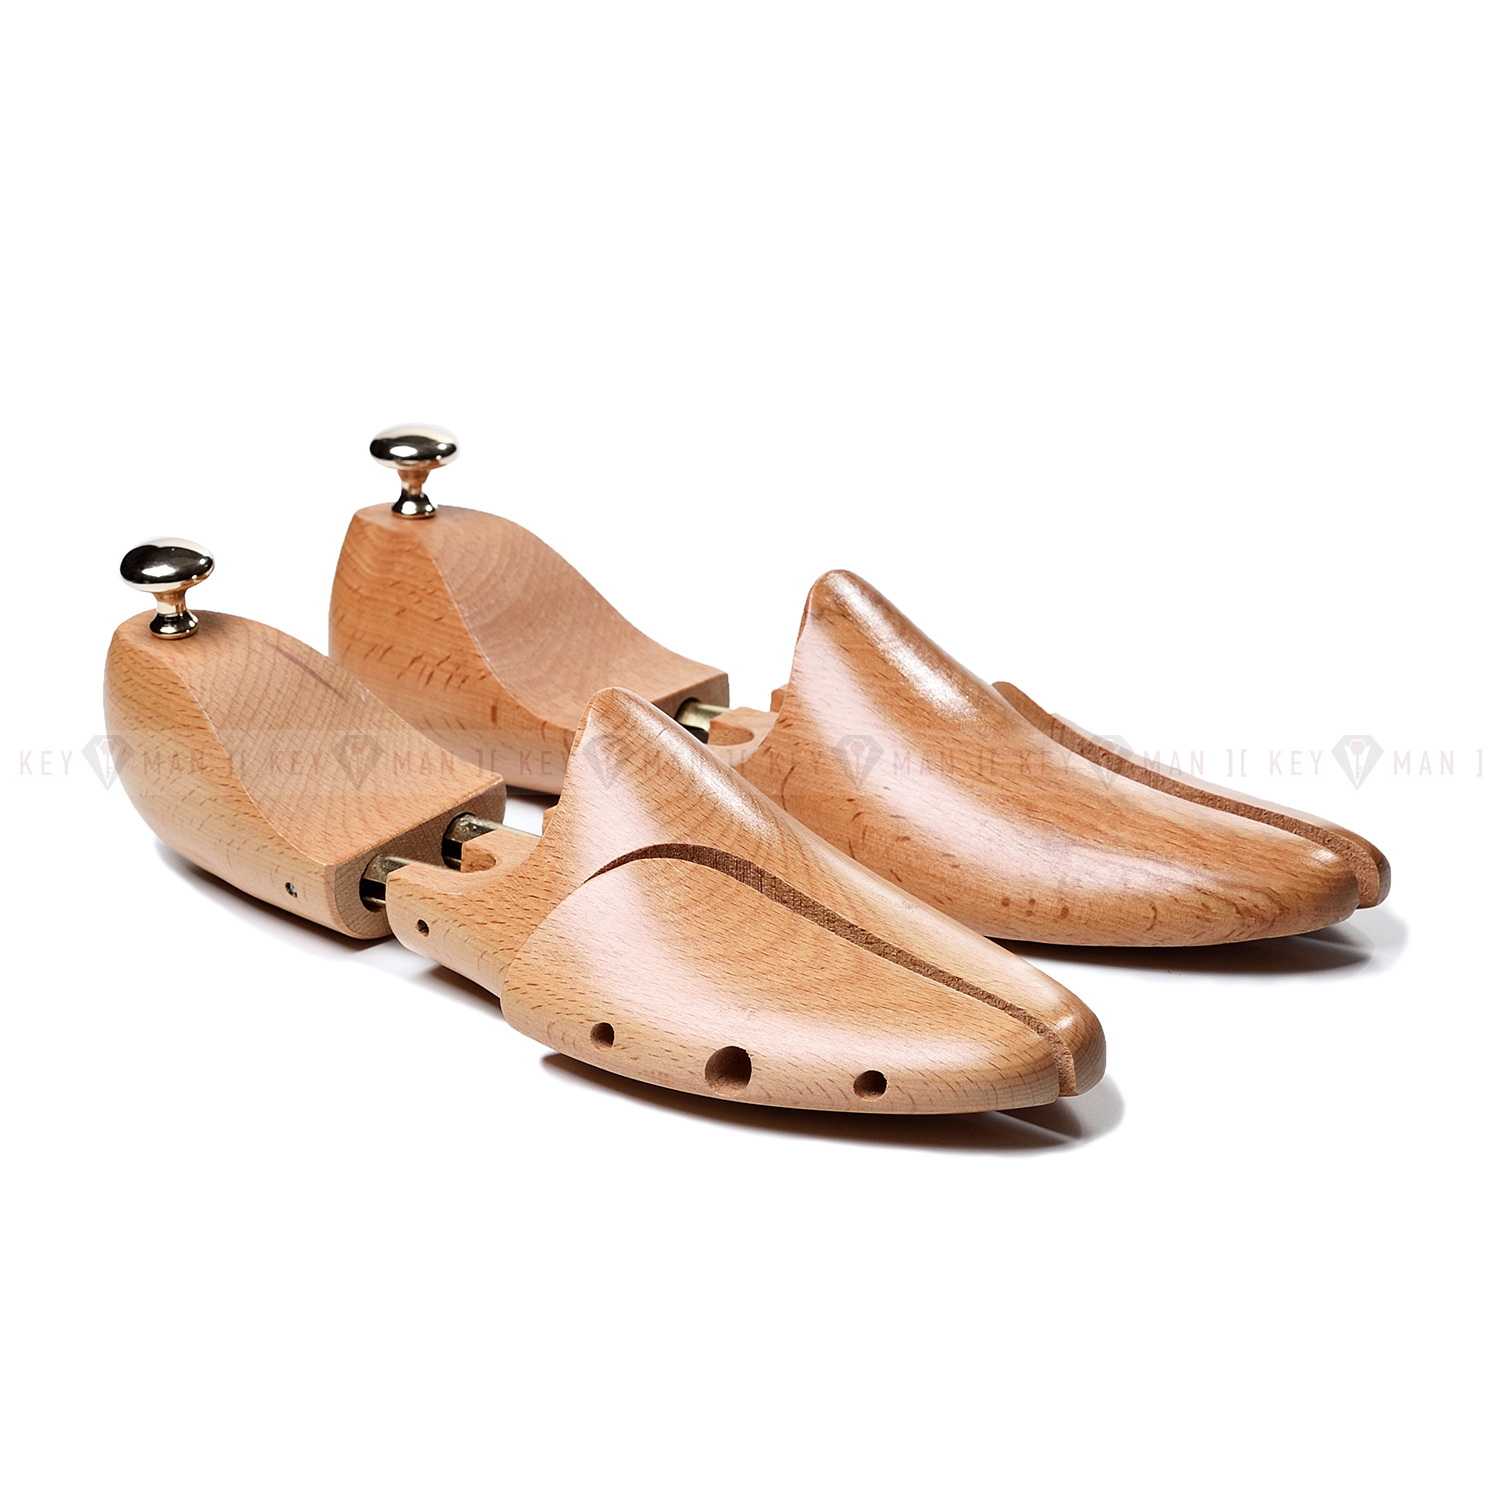 Колодки для обуви TAIMER | МАСТЕР - КОМПЛЕКТ интернет магазин